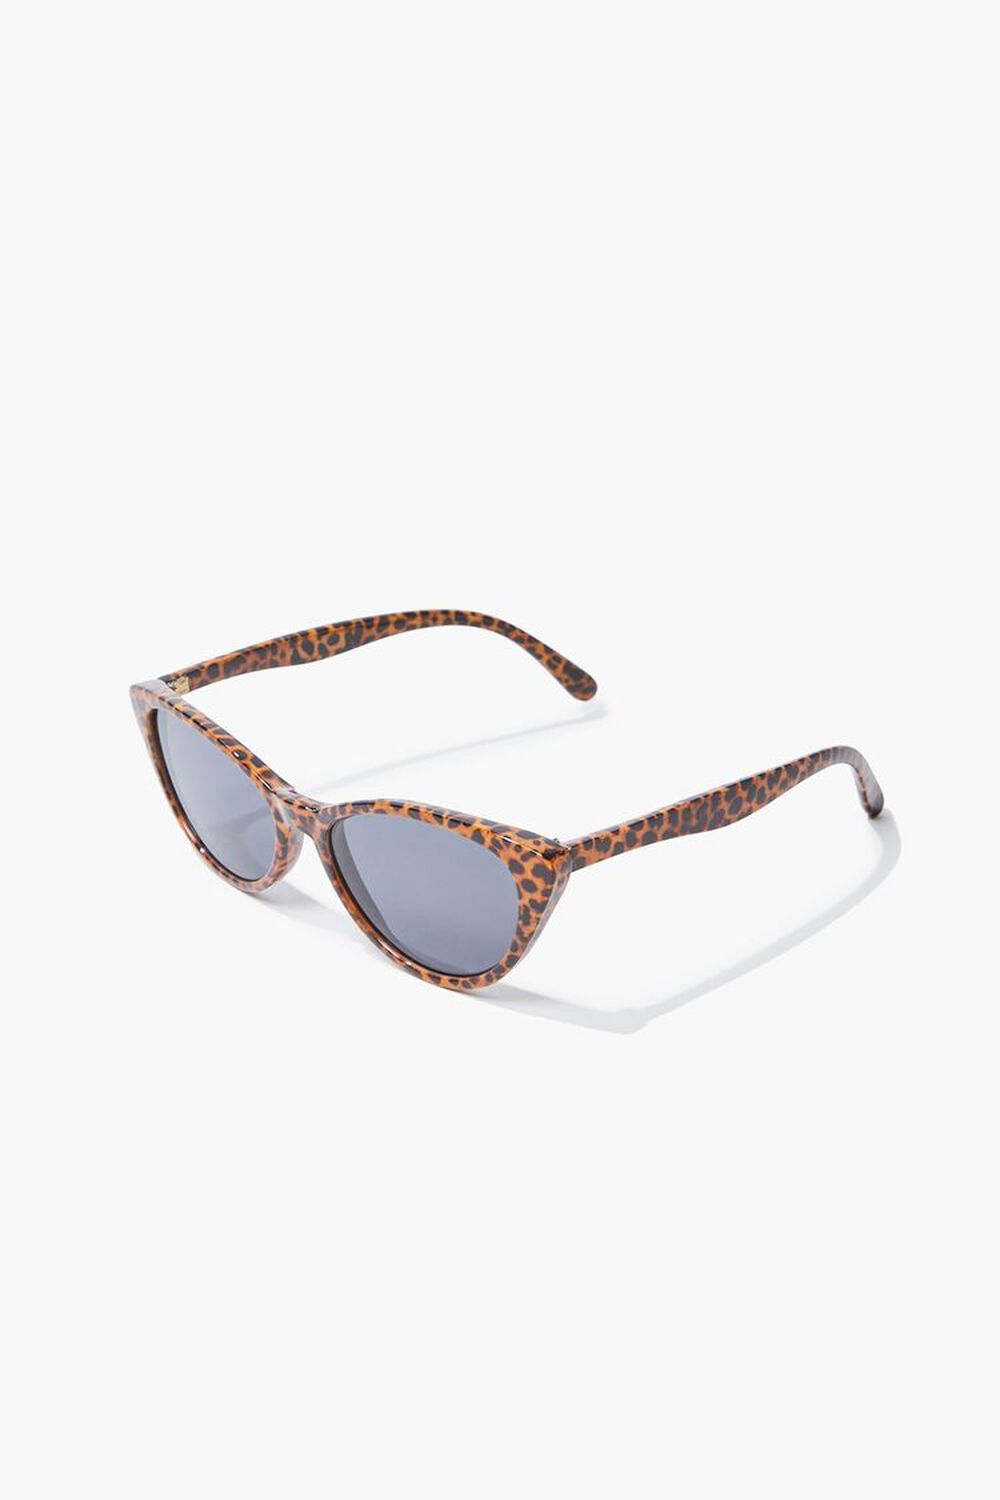 BLACK/MULTI Cheetah Cat-Eye Sunglasses, image 3